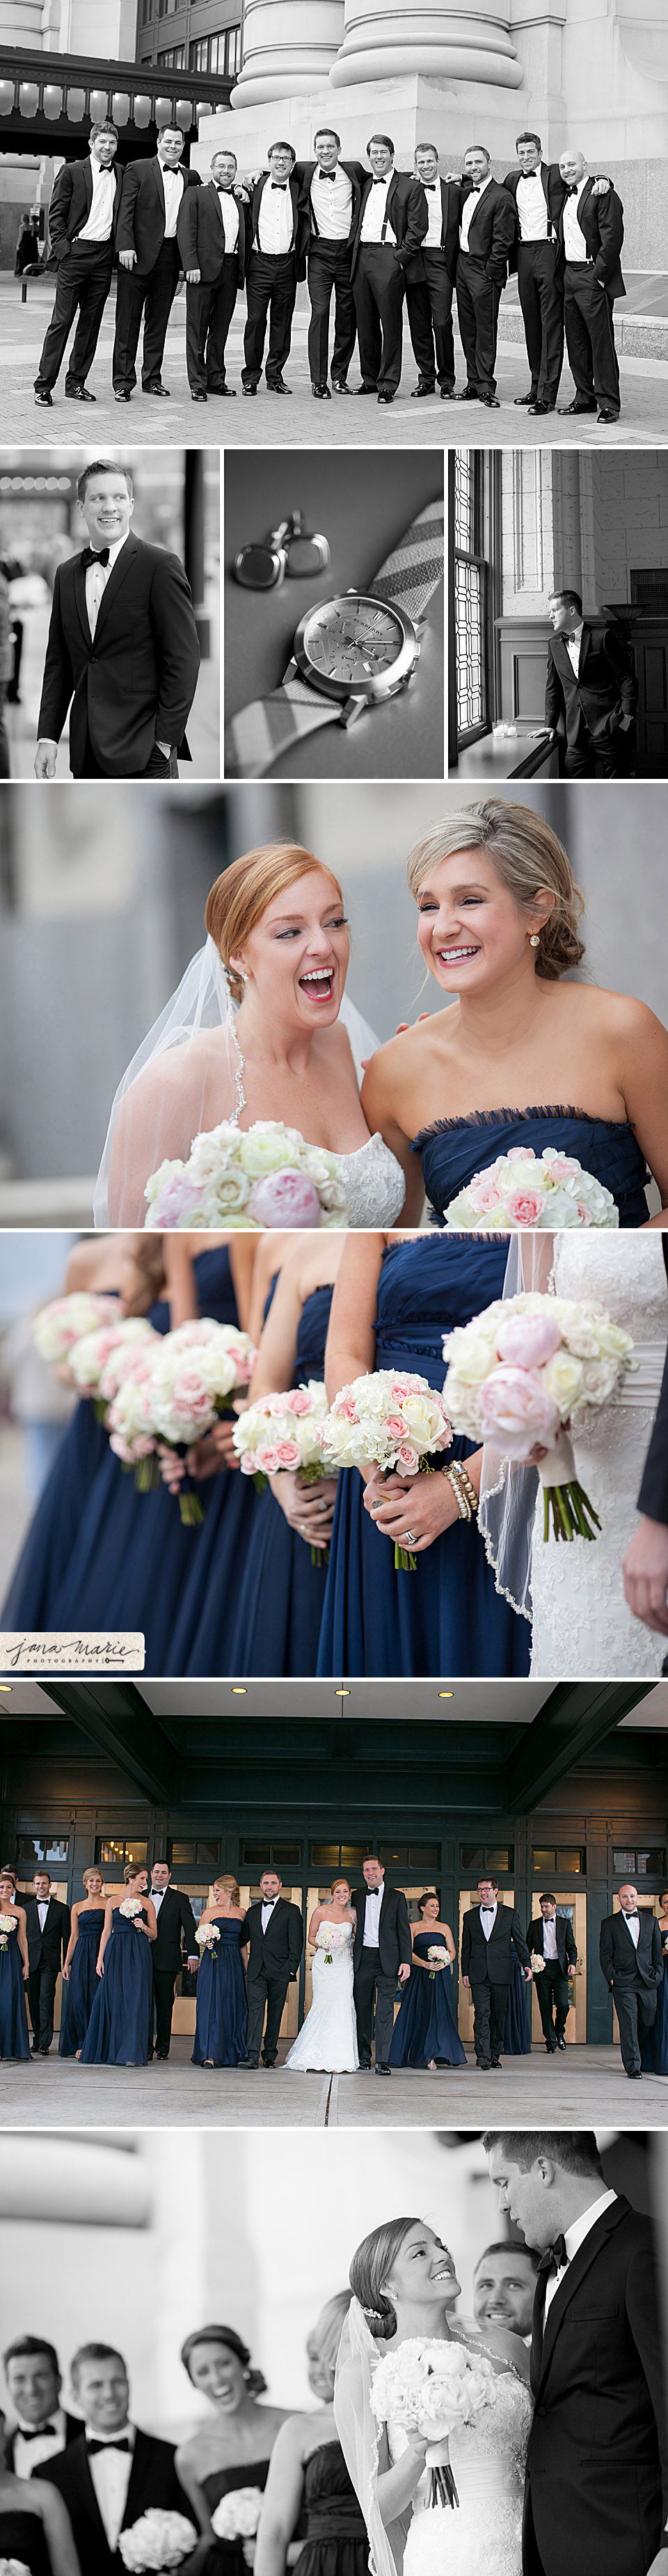 Winter weddings, KC wedding photography, Jana Marie Photos, navy blue bridesmaid dresses, laugh, happy couple